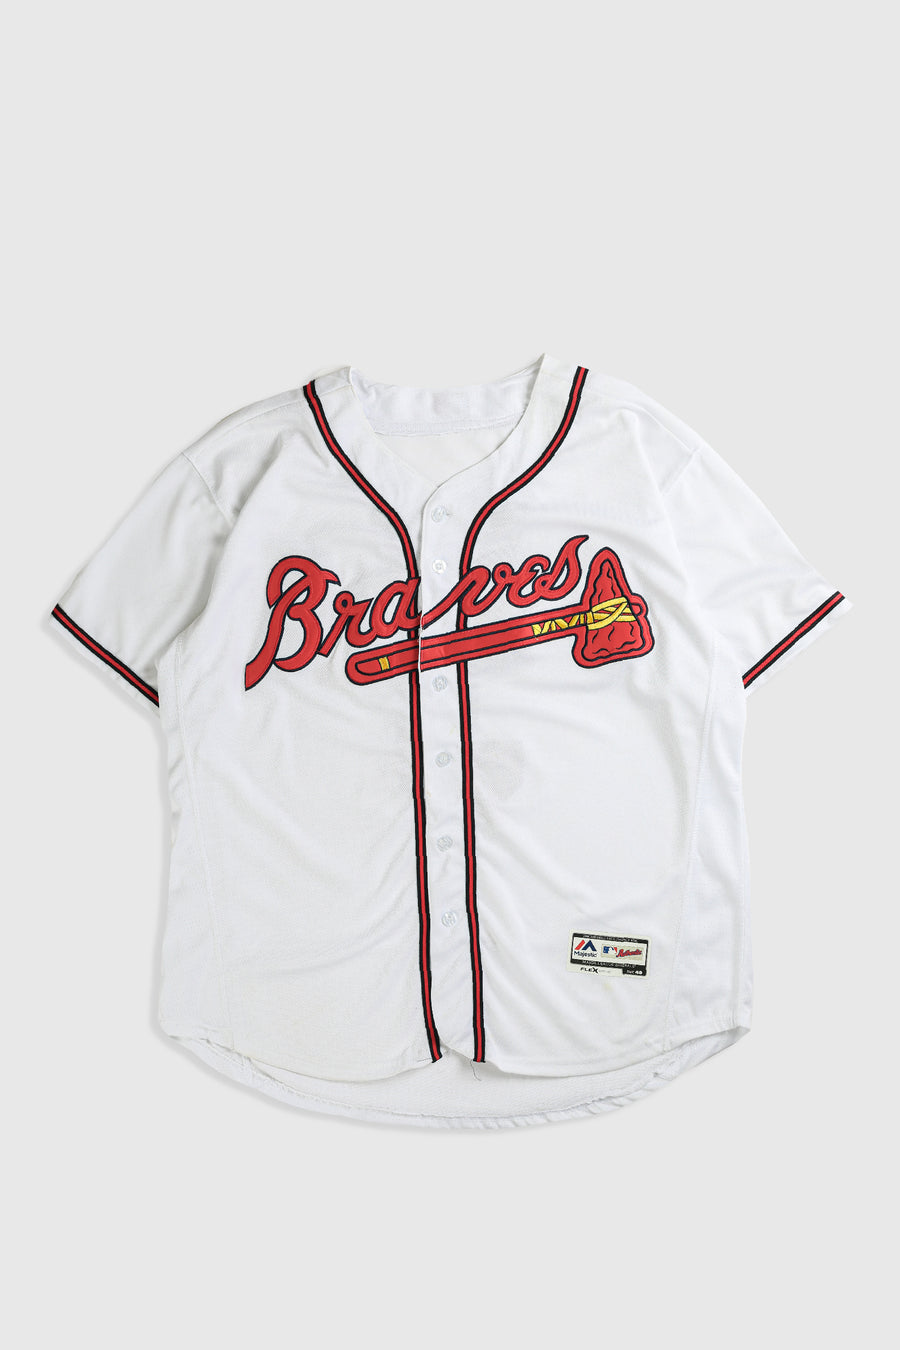 Vintage Braves Baseball Jersey